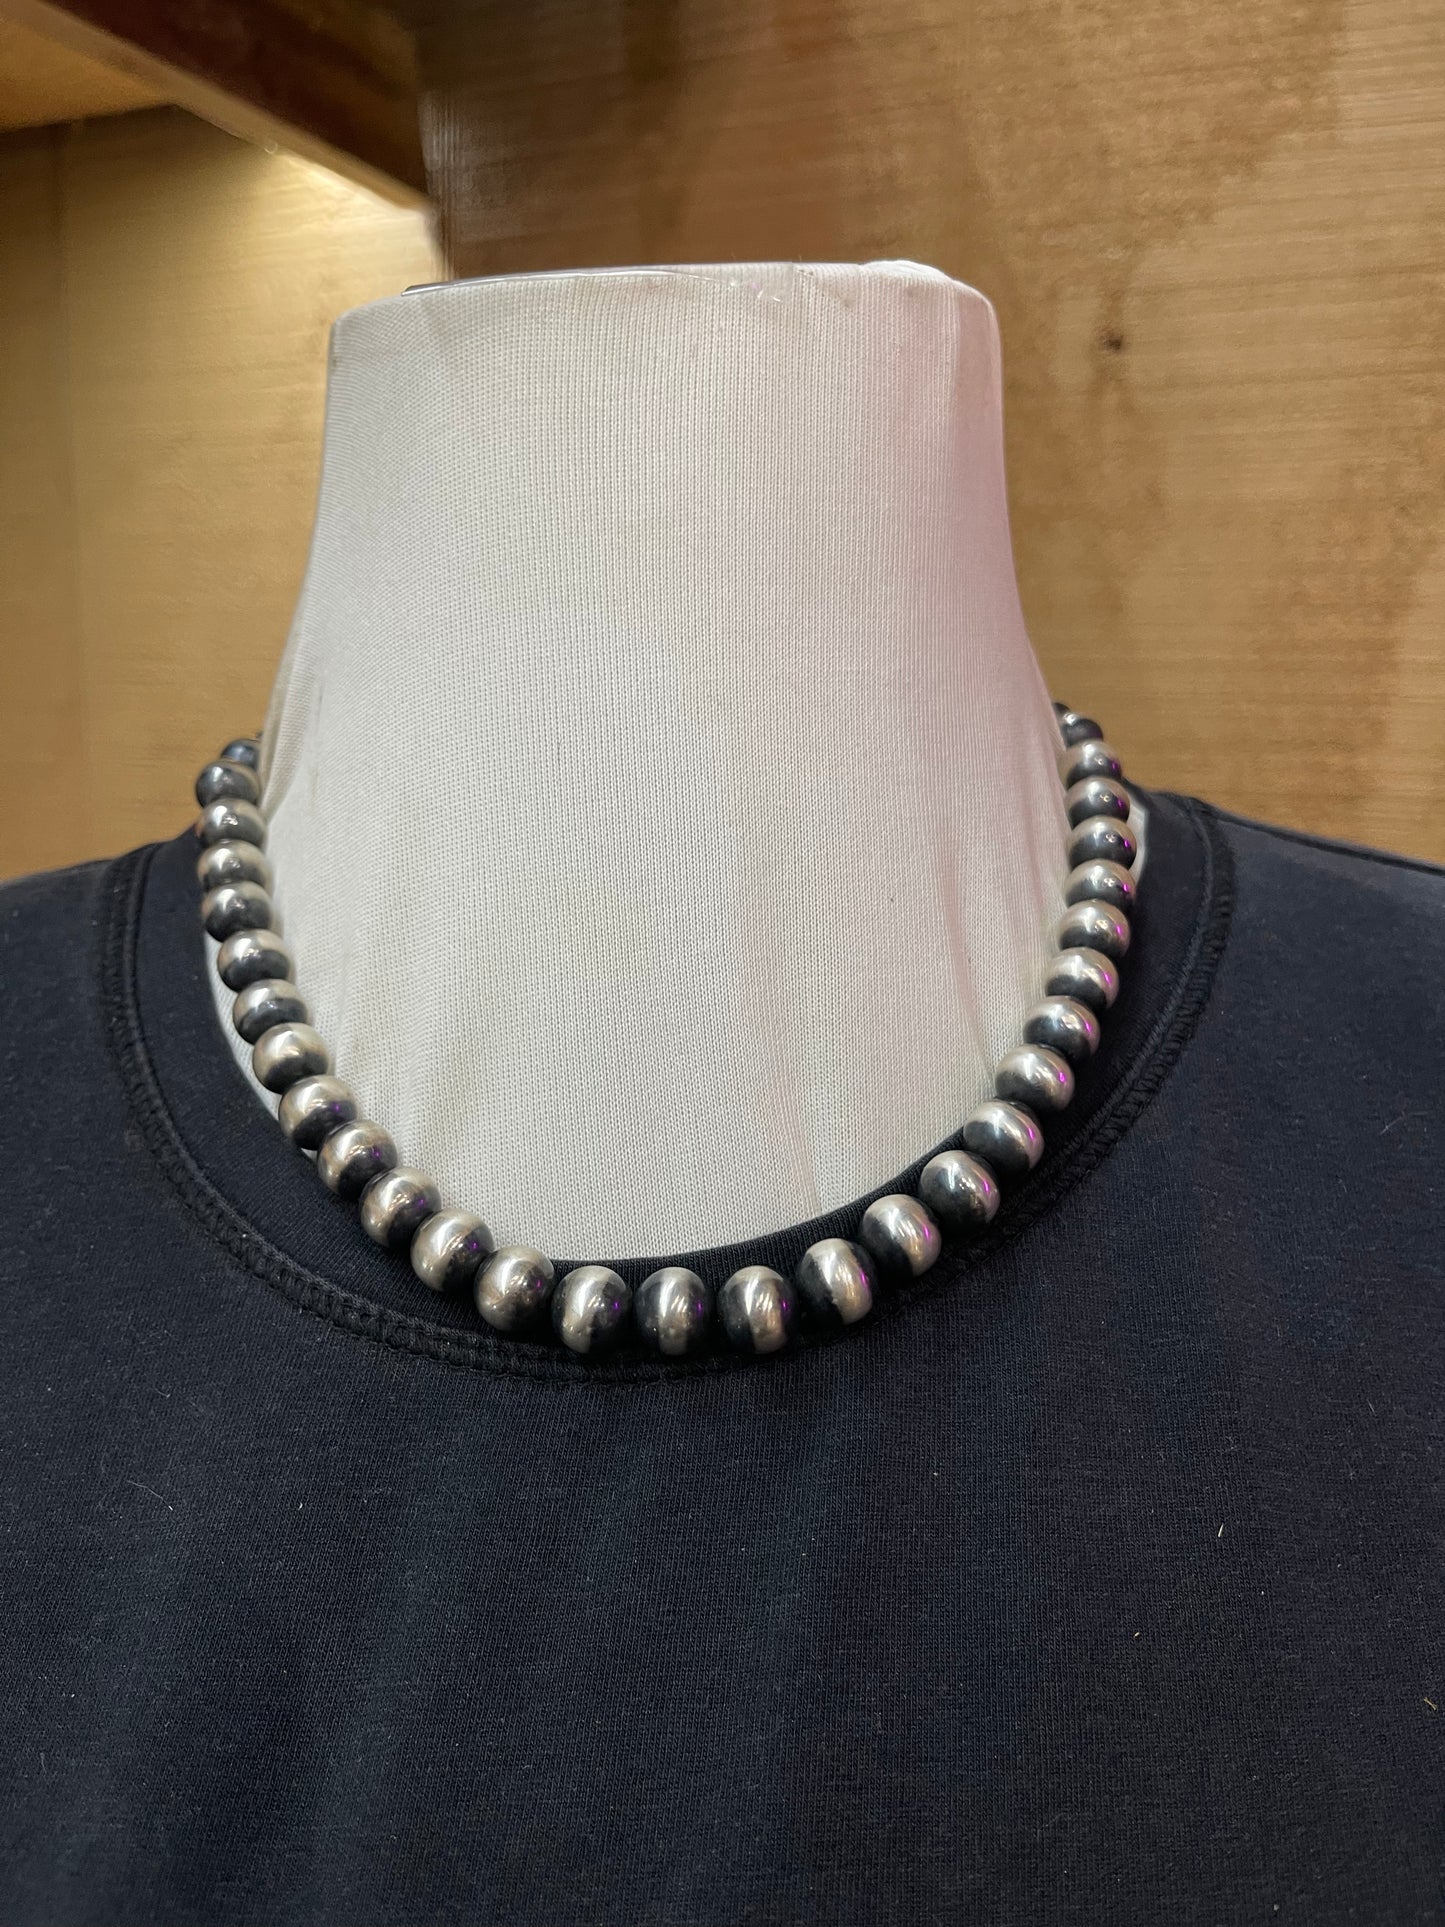 18” 10mm Navajo Pearls